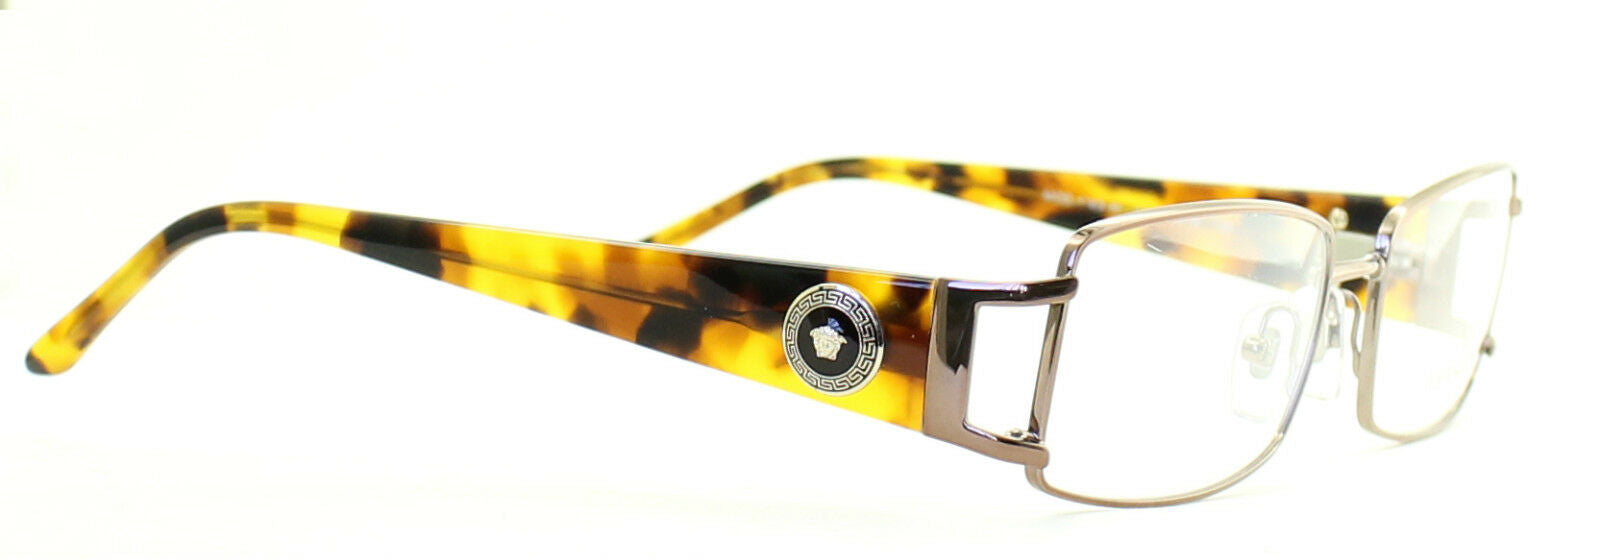 VERSACE 1163M 1013 52mm Eyewear FRAMES Glasses RX Optical Eyeglasses Italy - New